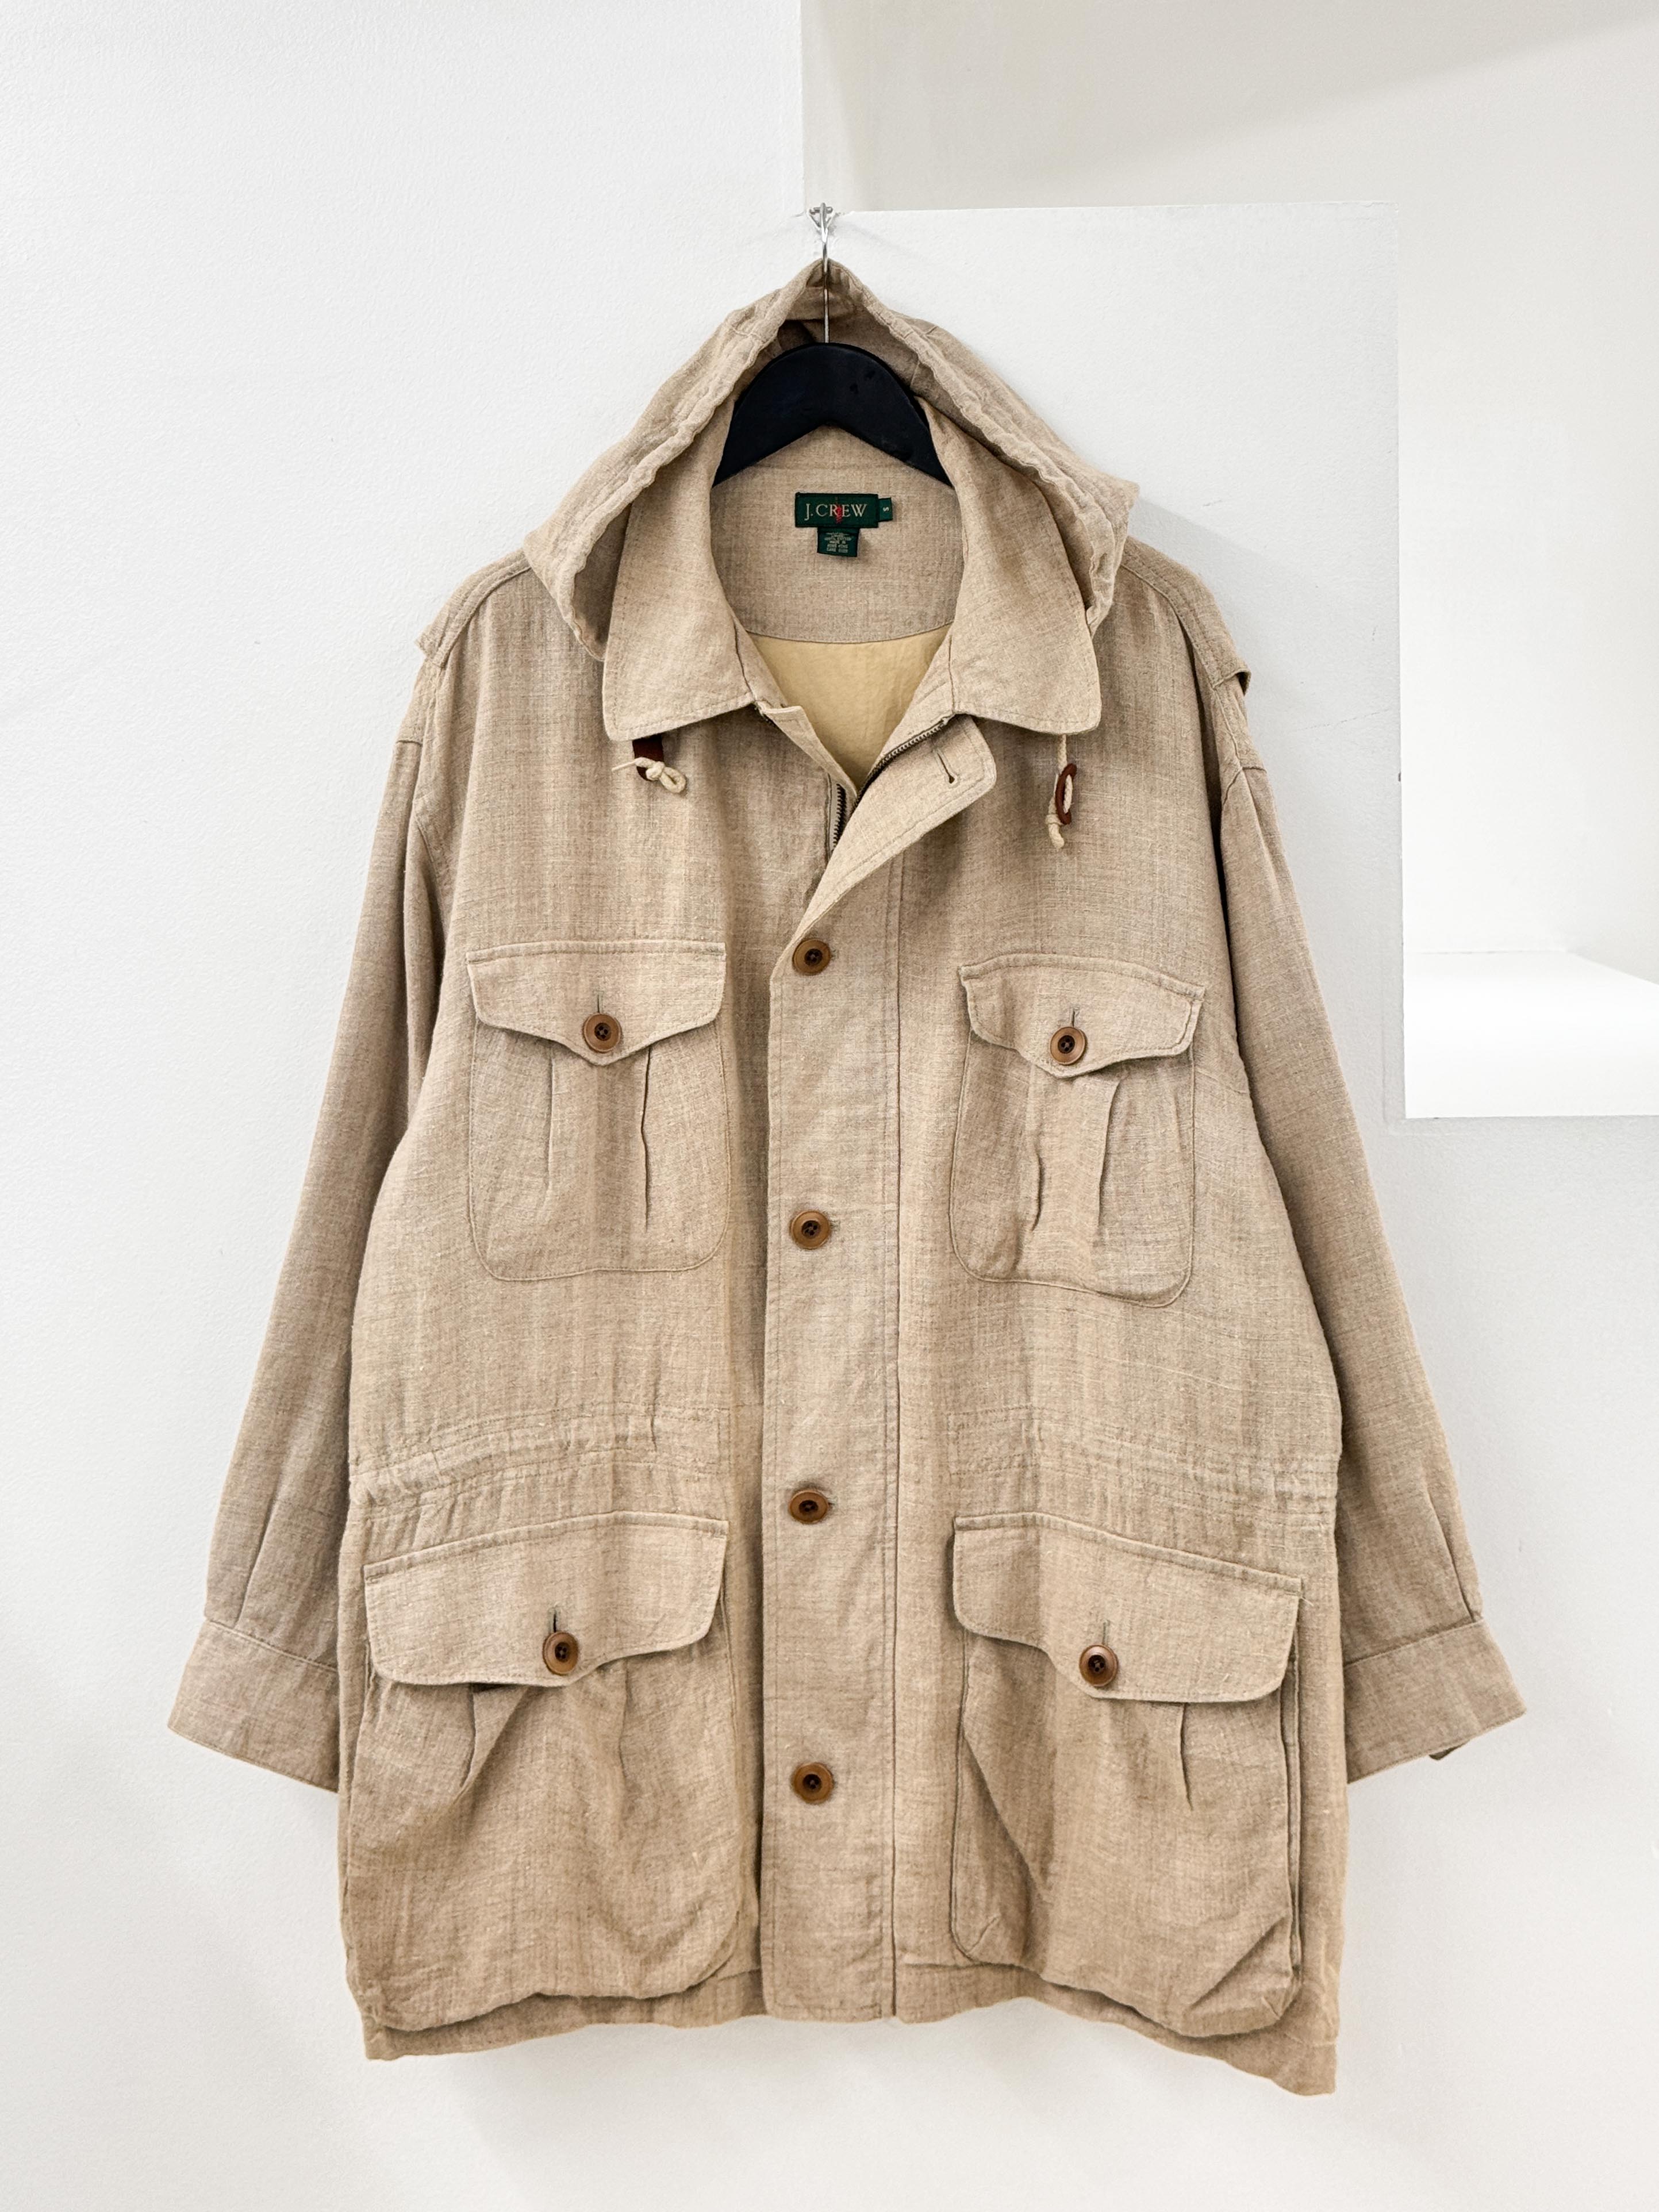 J.CREW linen safari jacket